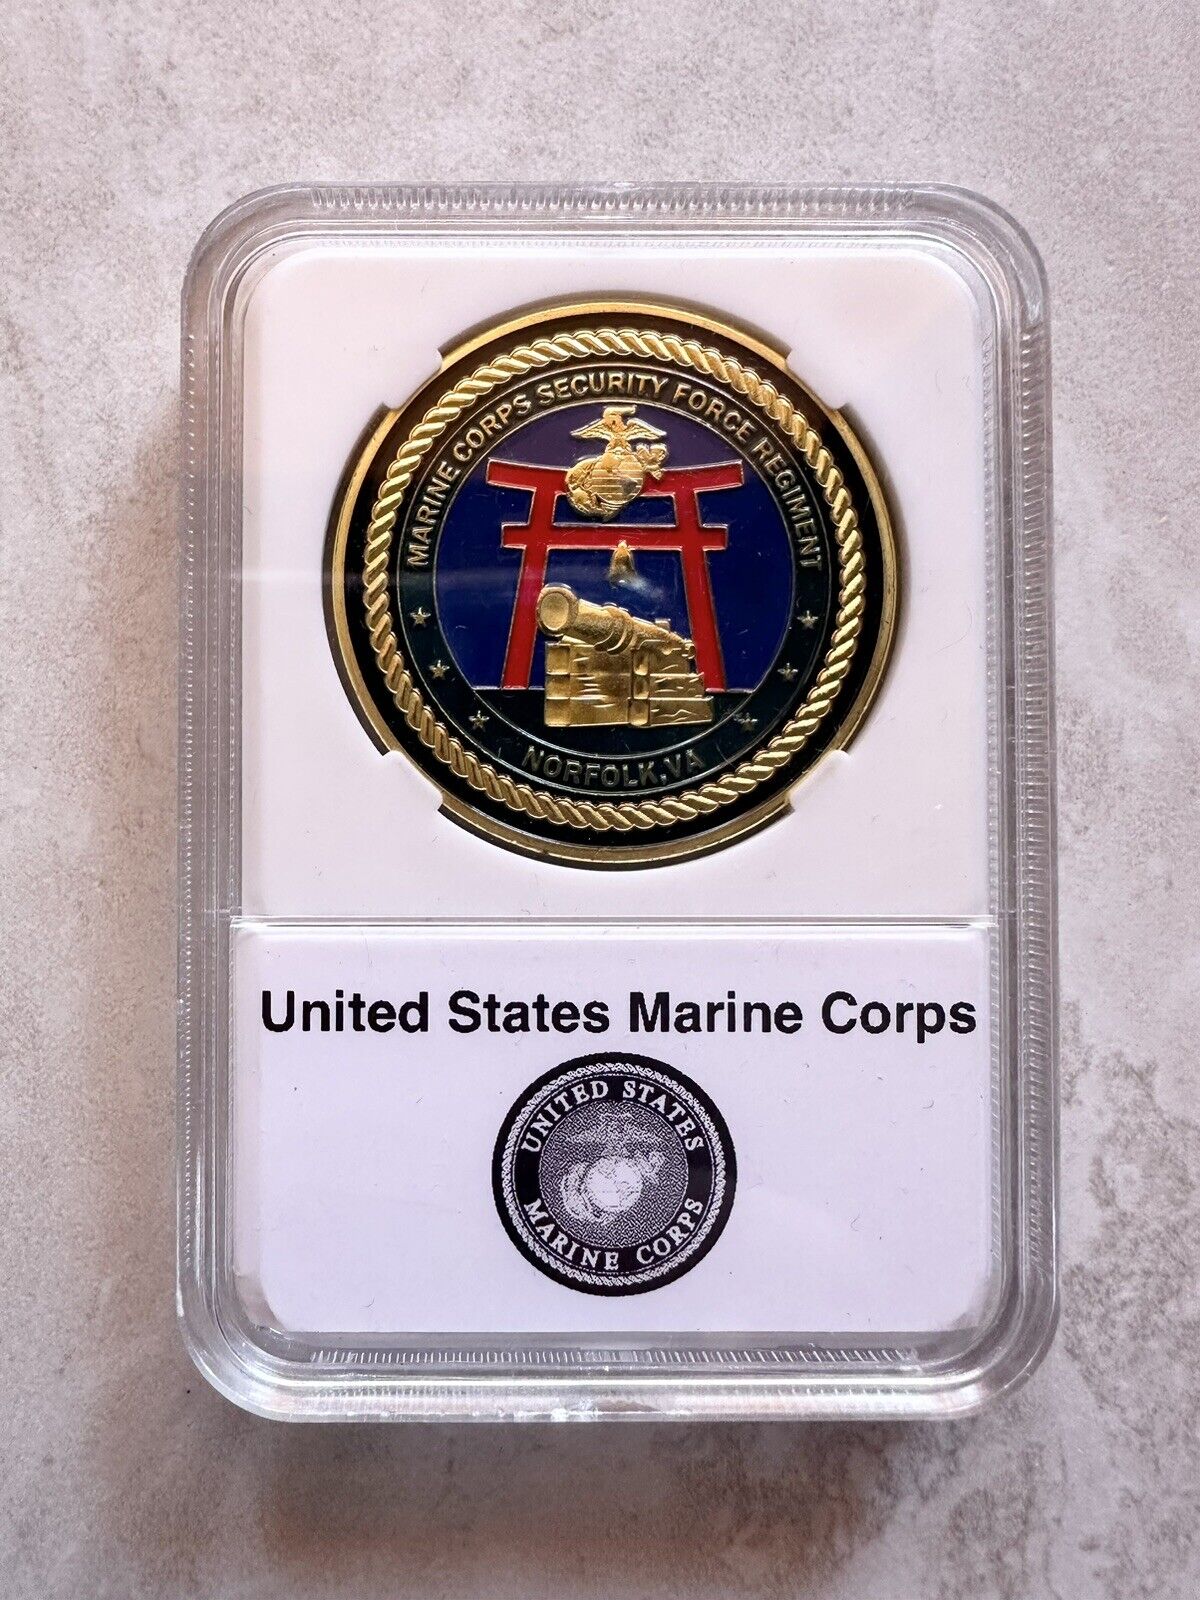 USMC US MARINE CORPS SECURITY FORCE REGIMENT, NORFOLK, VA CHALLENGE COIN